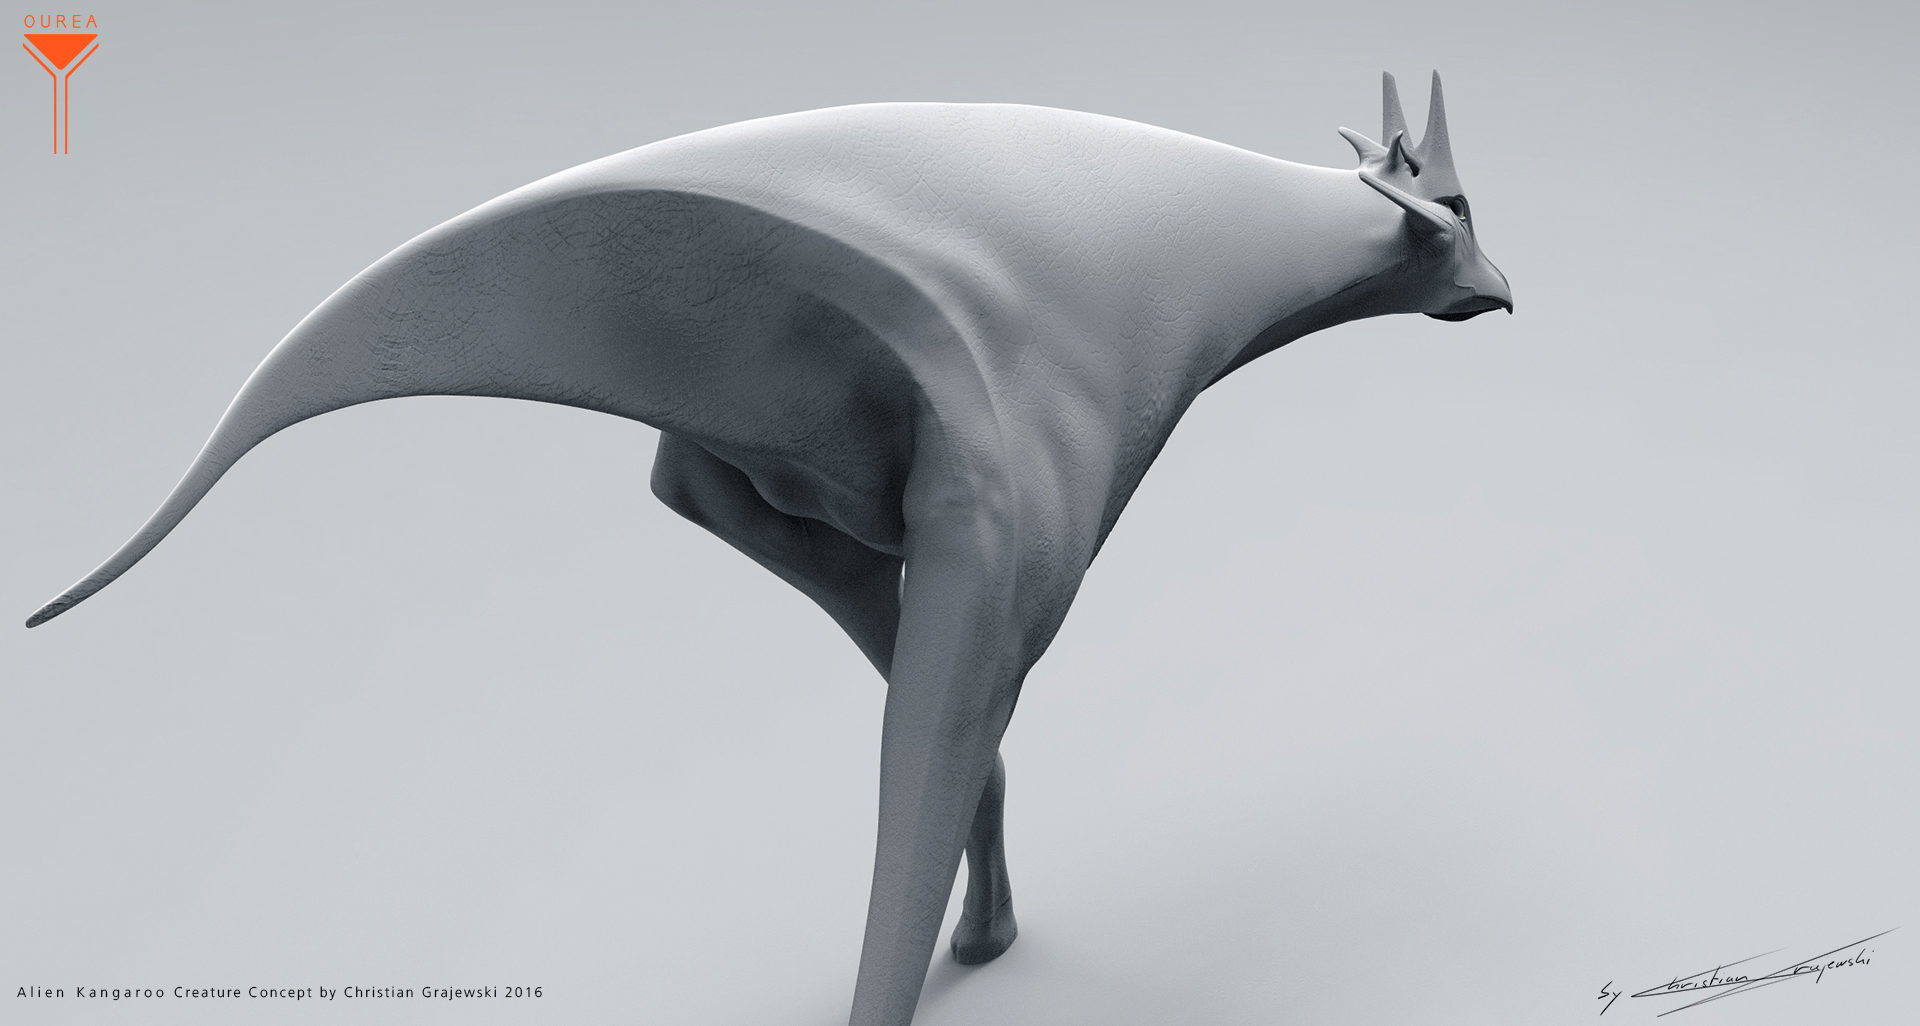 Alien Kangaroo Creature Concept 06 by Christian Grajewski.jpg